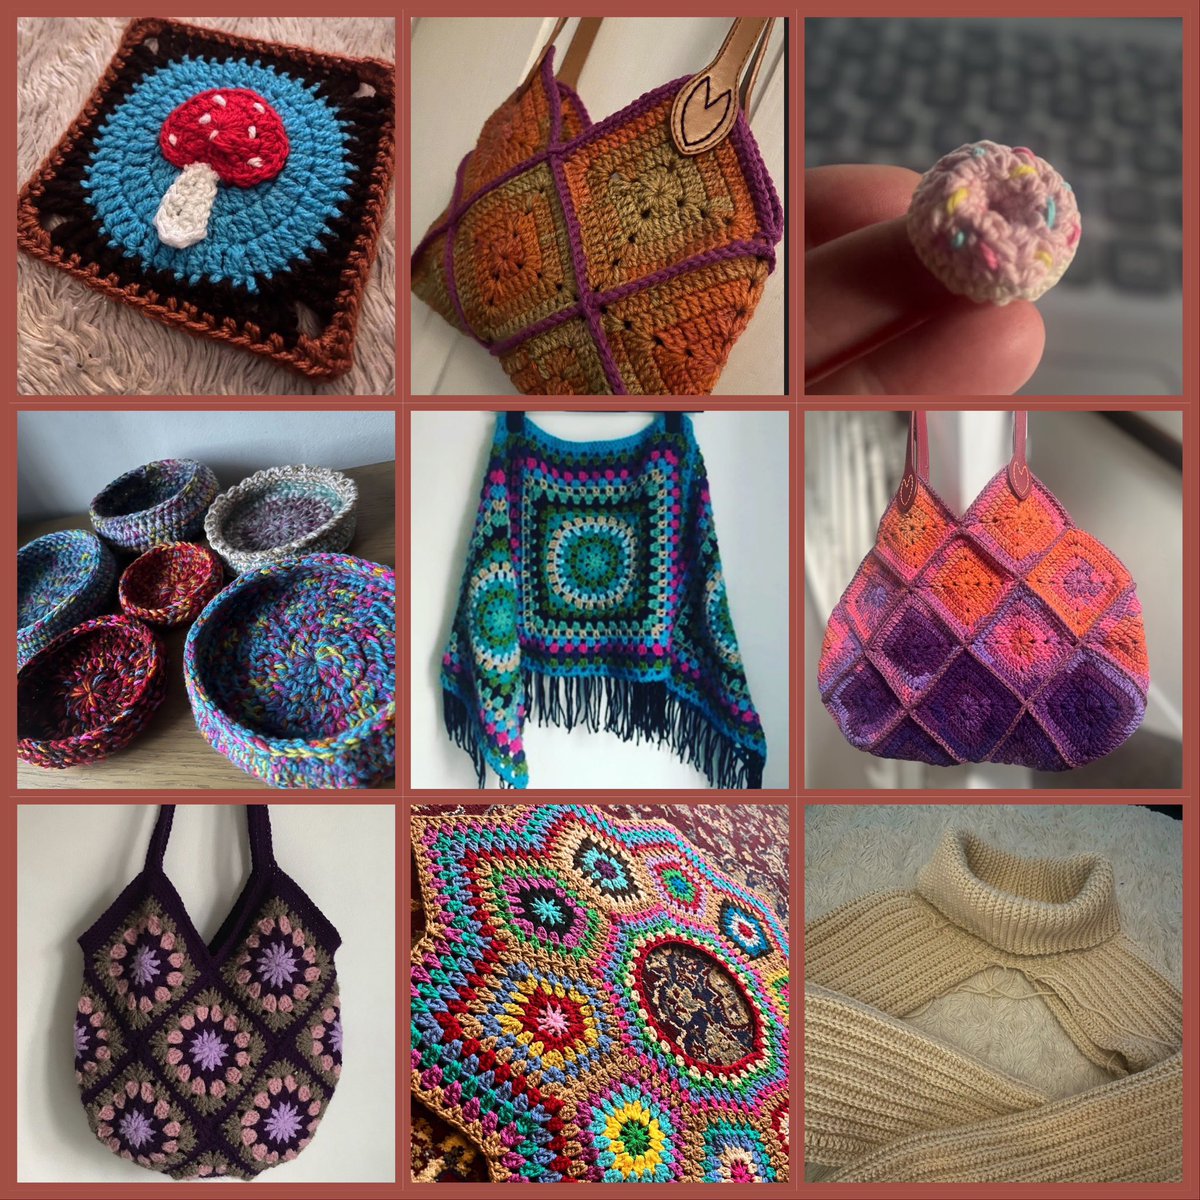 @MHHSBD Hiya I’m Diana 👋🏻 I am a crochet designer sometimes a painter🎨 I love crocheting bright unique items ☺️ I have a yarn addiction 😂 #MHHSBD #Crochet #art #yarn dwcrochetpatterns.etsy.com